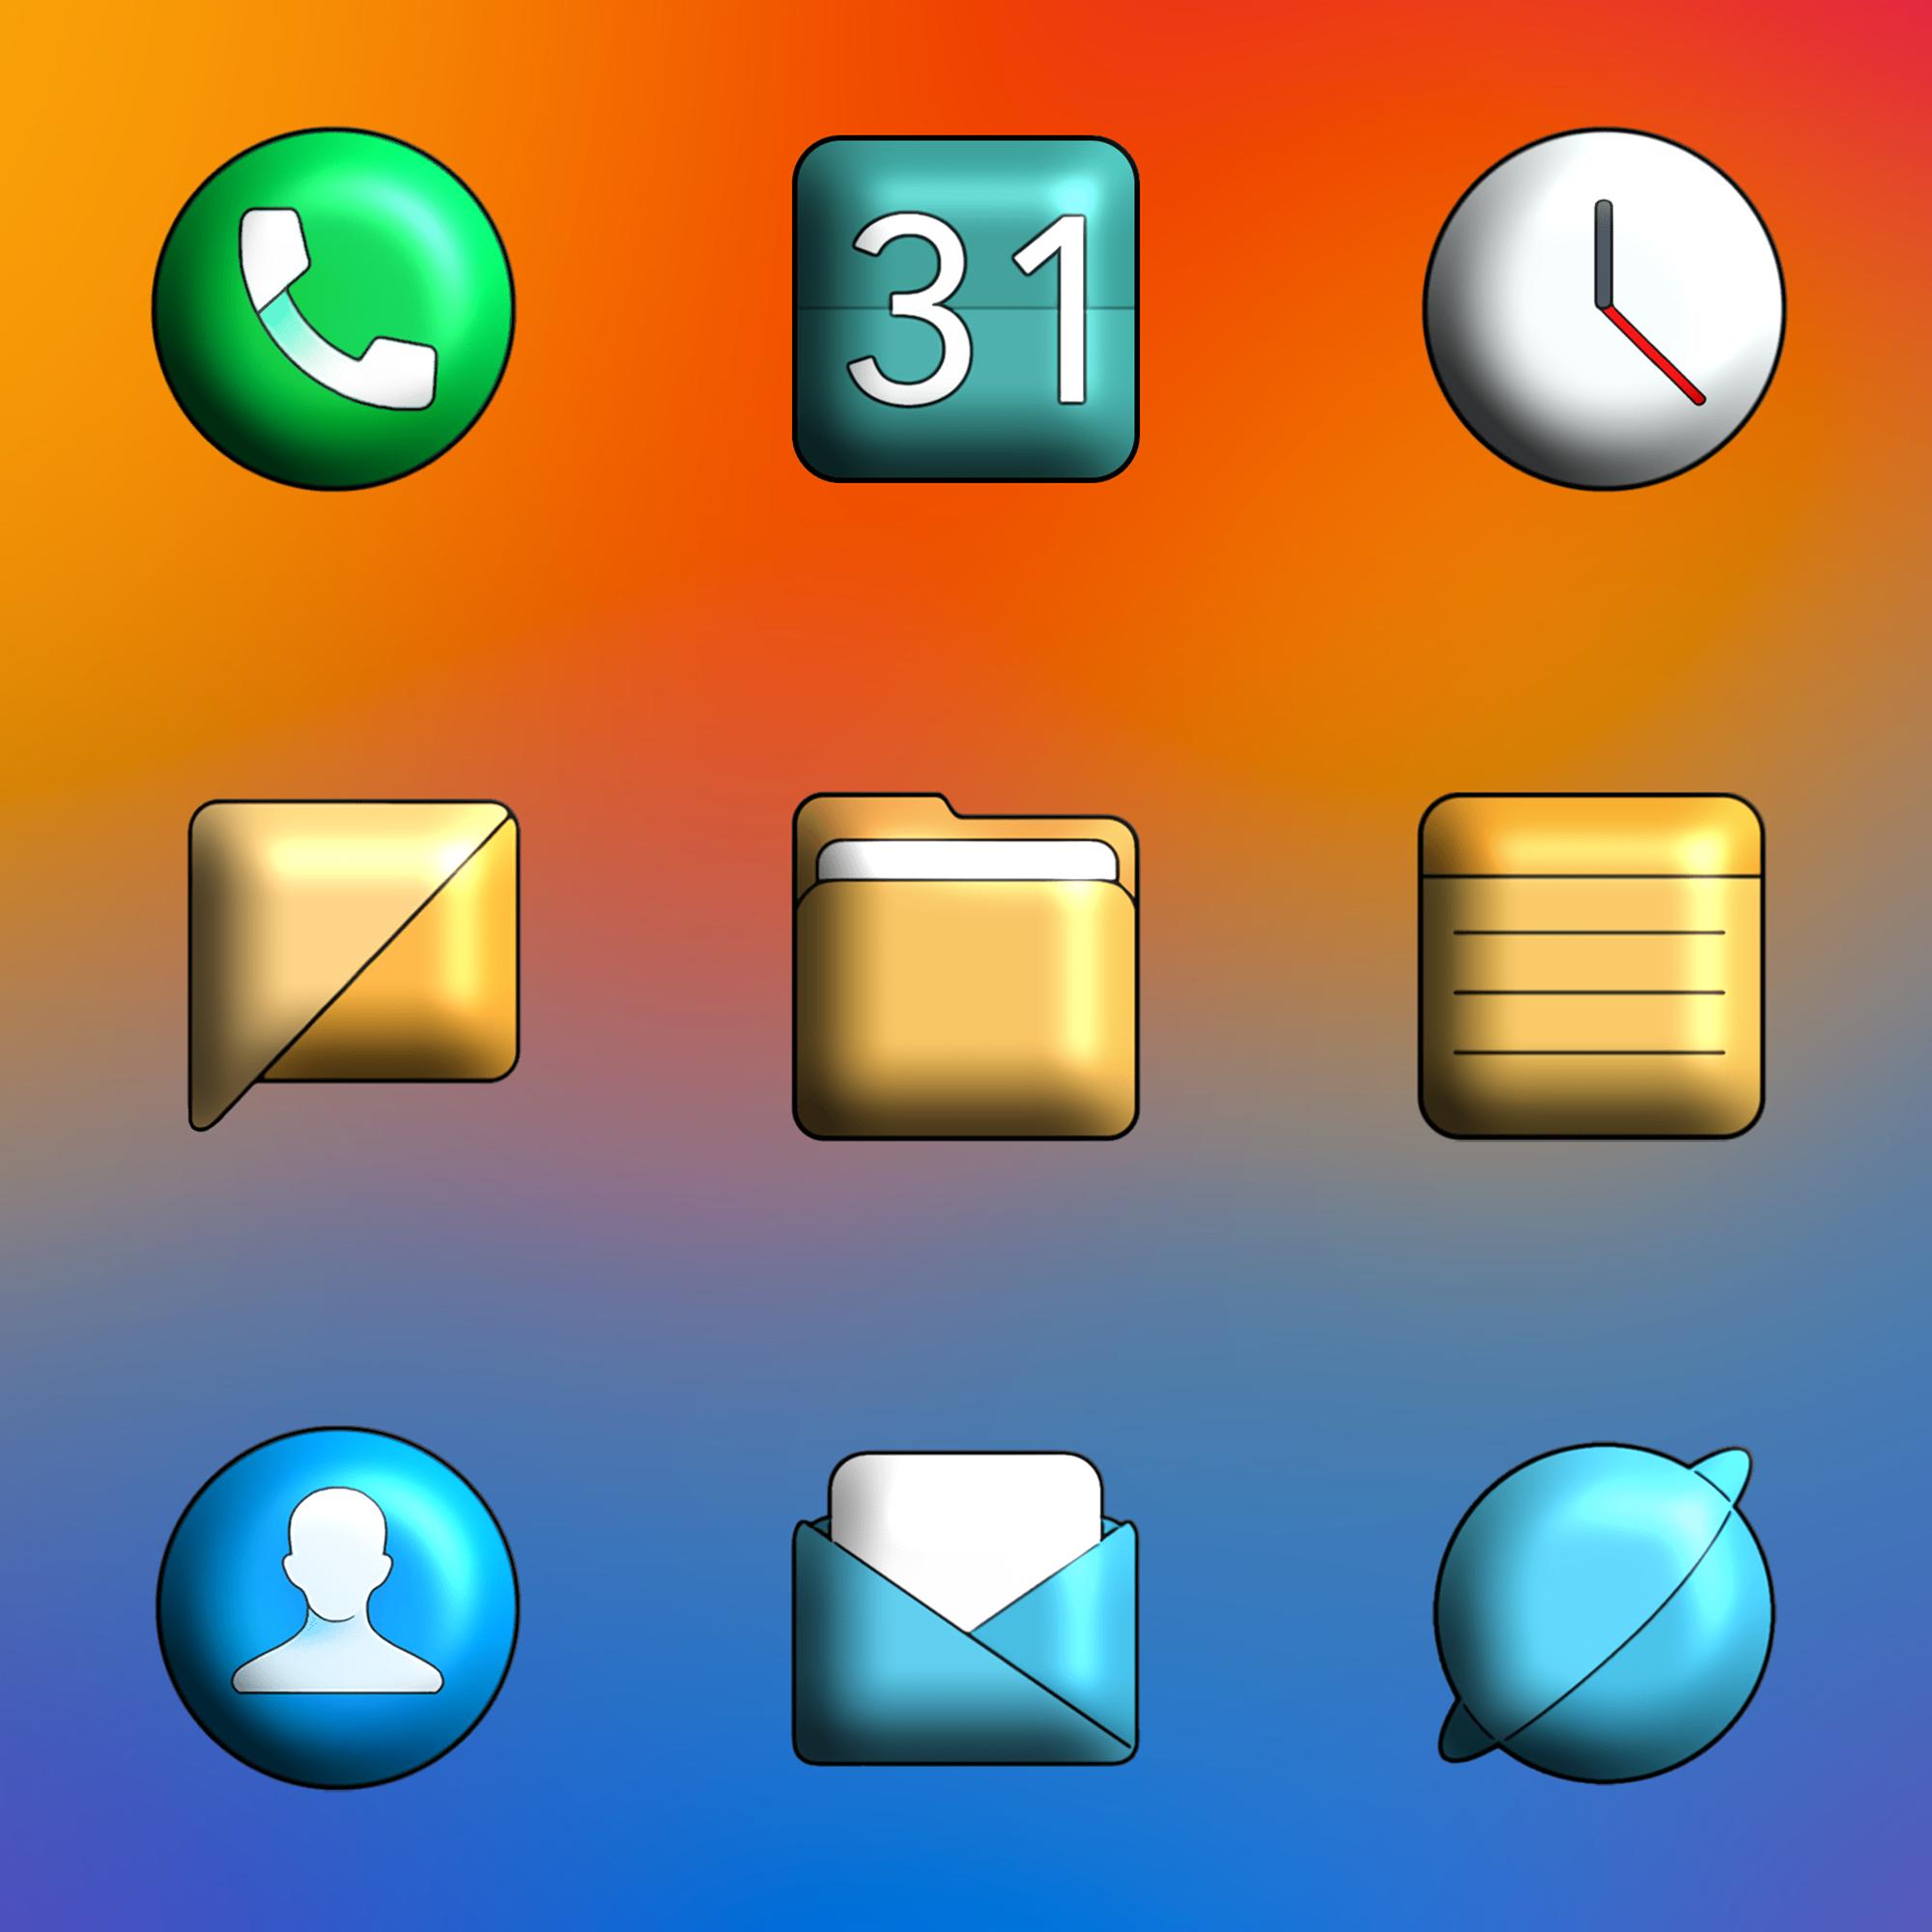 Miui icon pack. Крутые иконки для приложений. 3d иконки для андроид. Иконки миуи. 3д иконки для приложений.